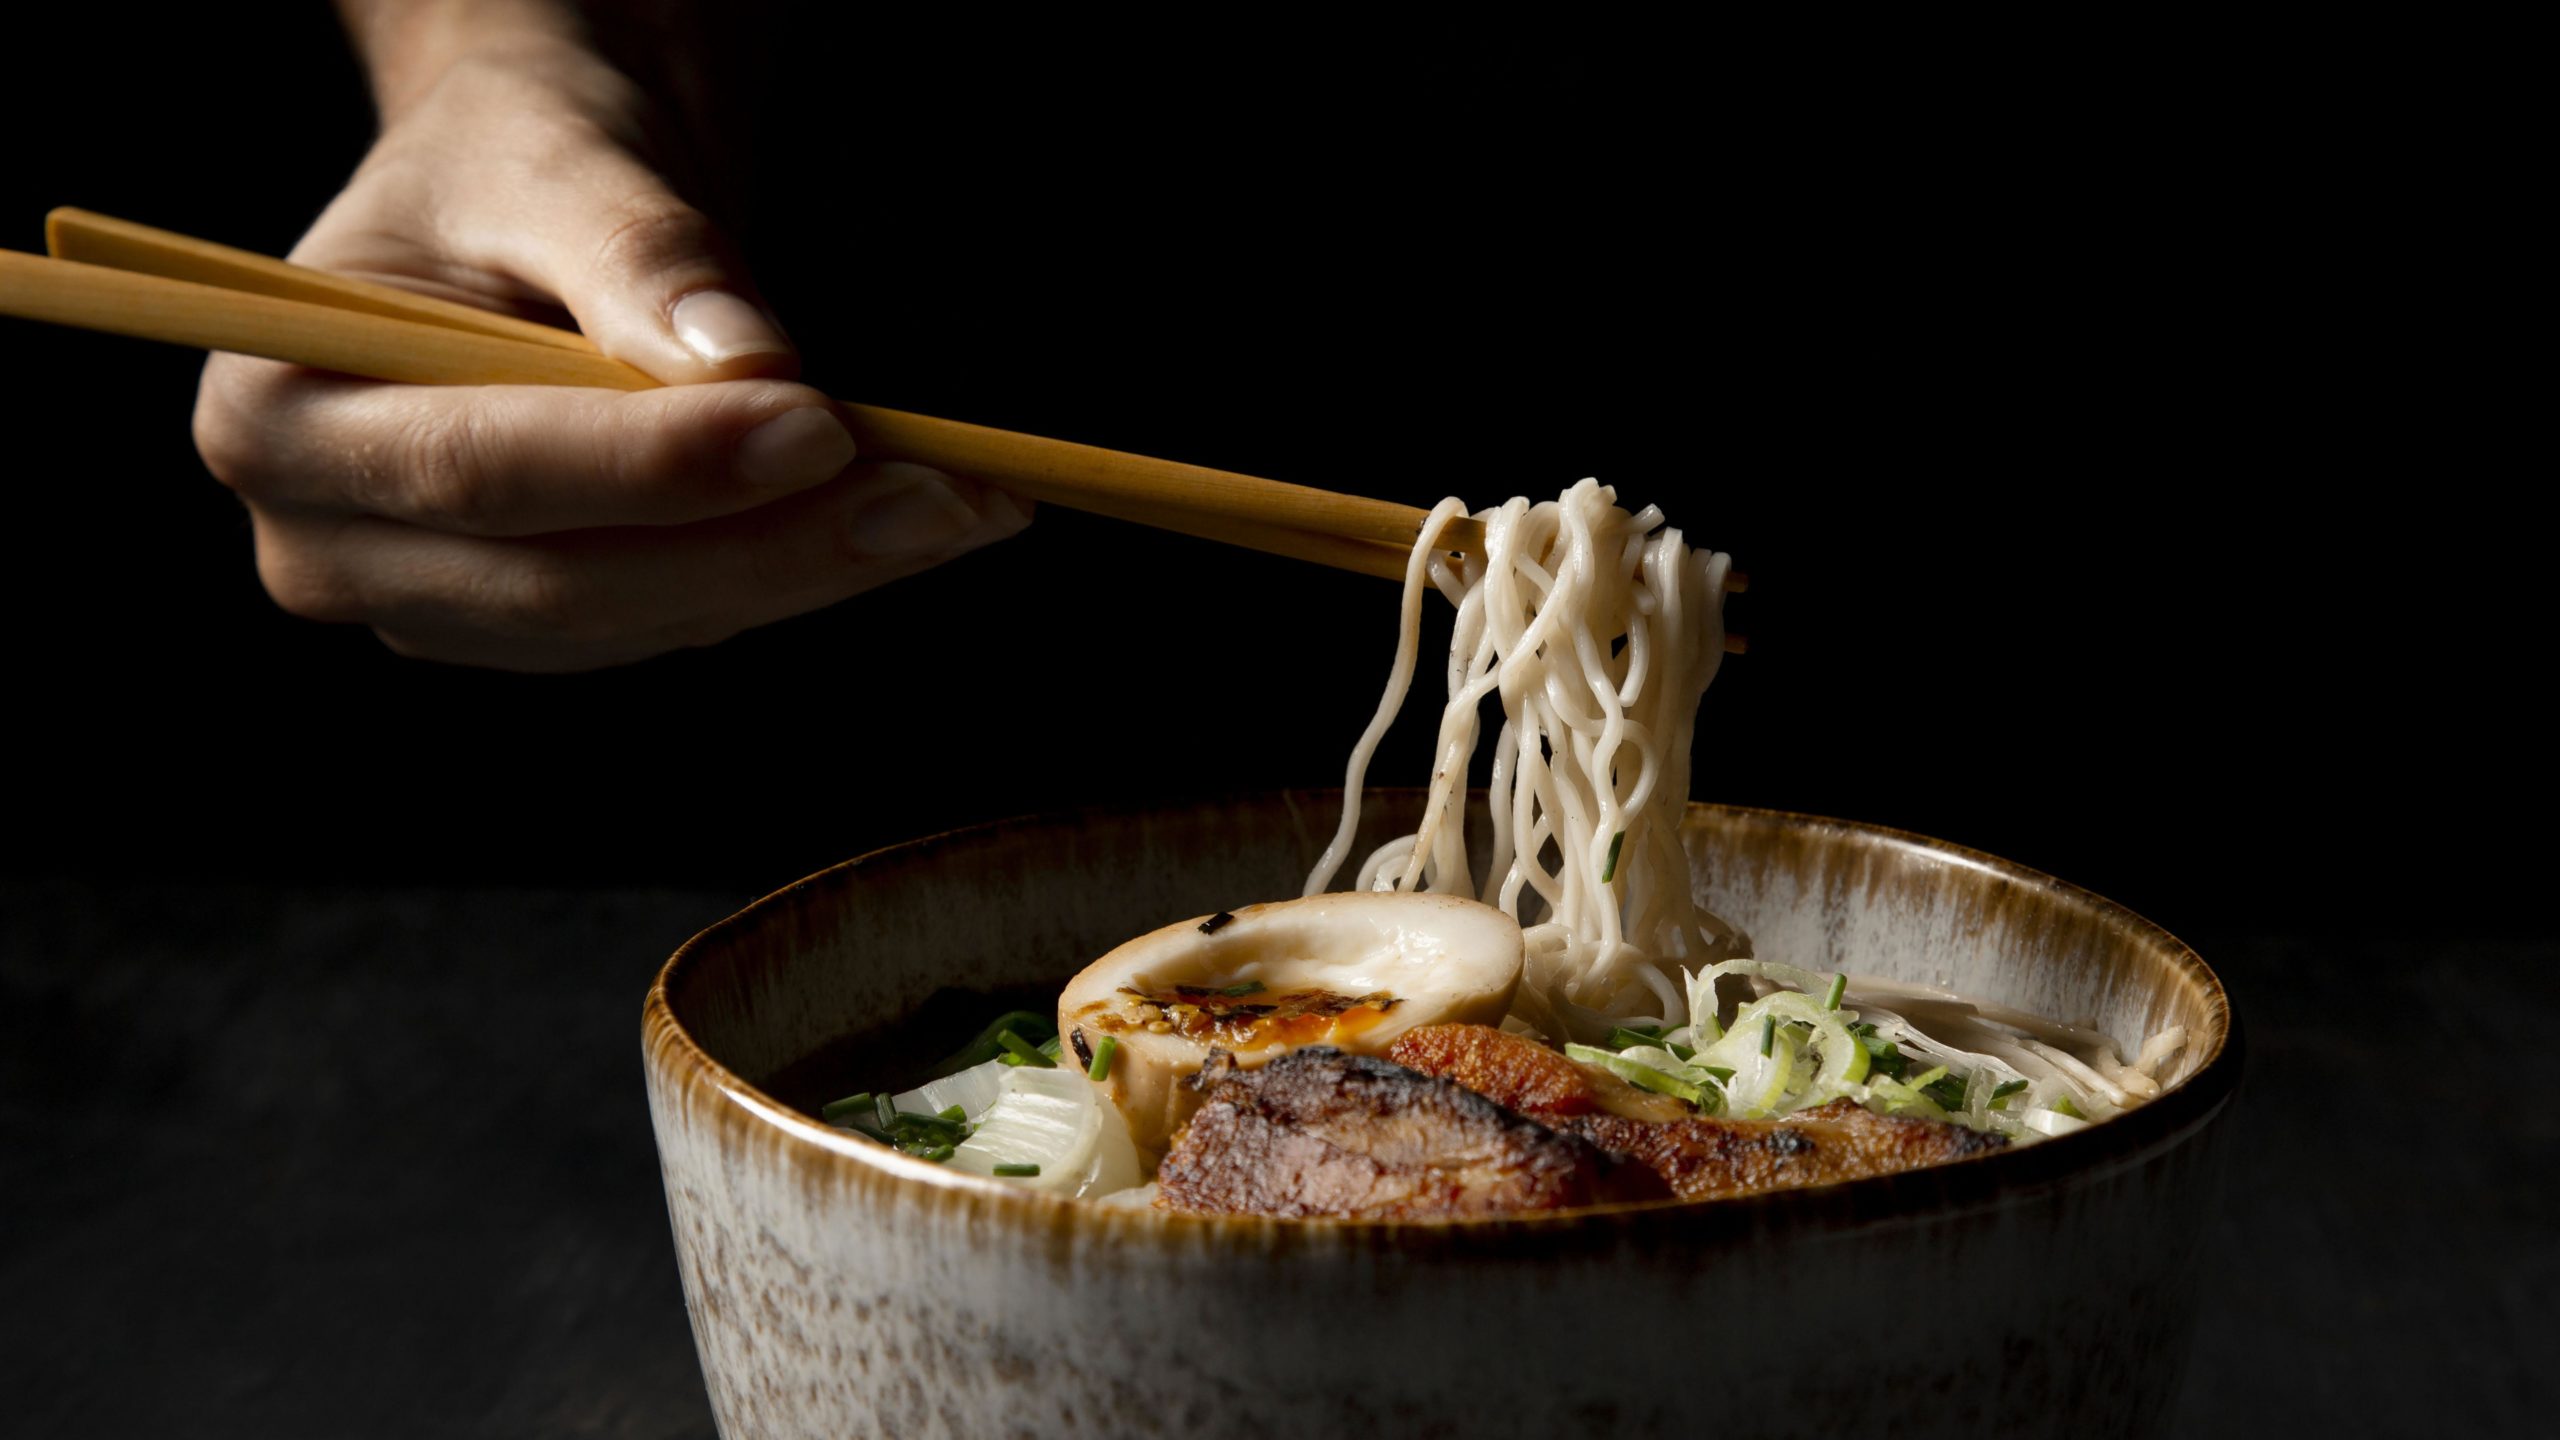 makanan jepang 1 scaled - Rekomendasi Makanan Khas Jepang Yang Wajib Di Coba!